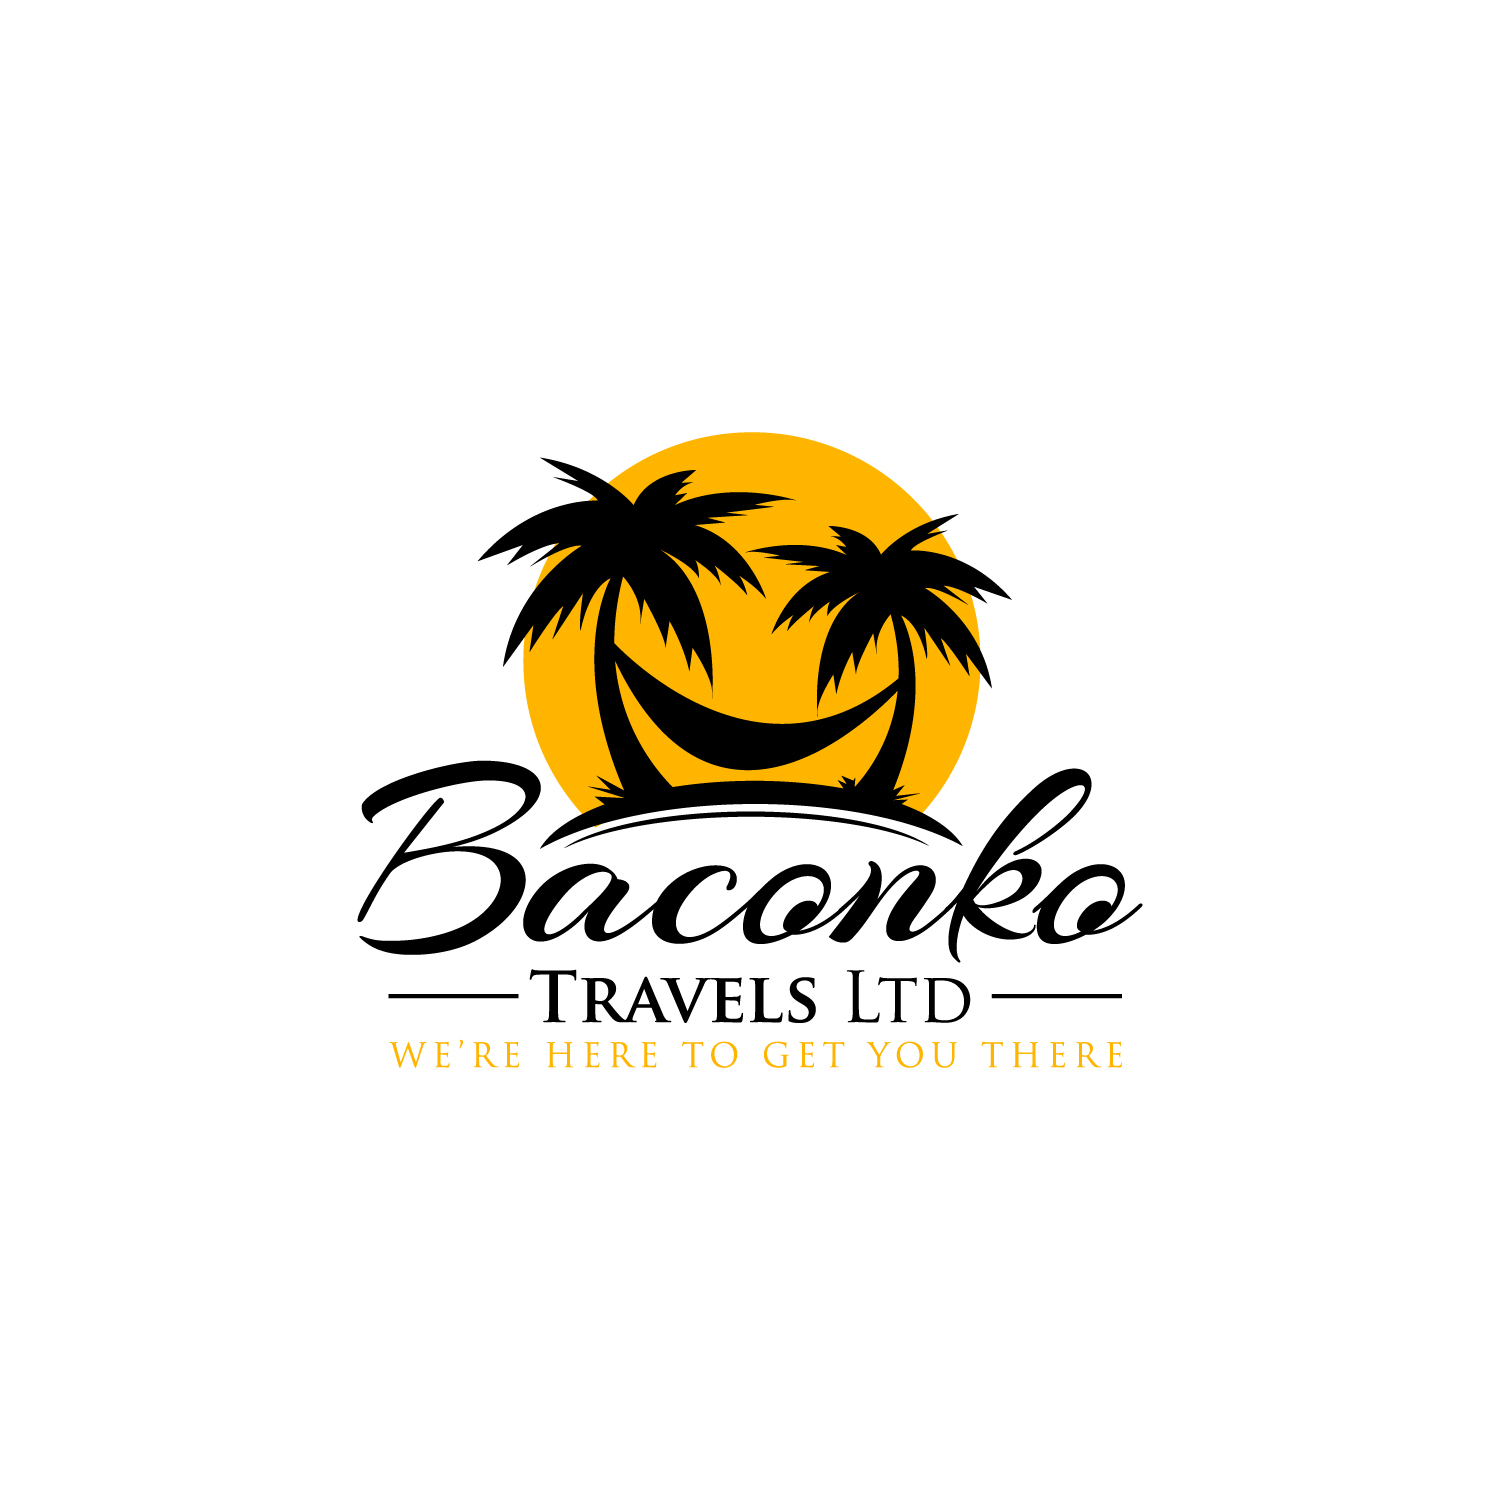 Baconko Travels